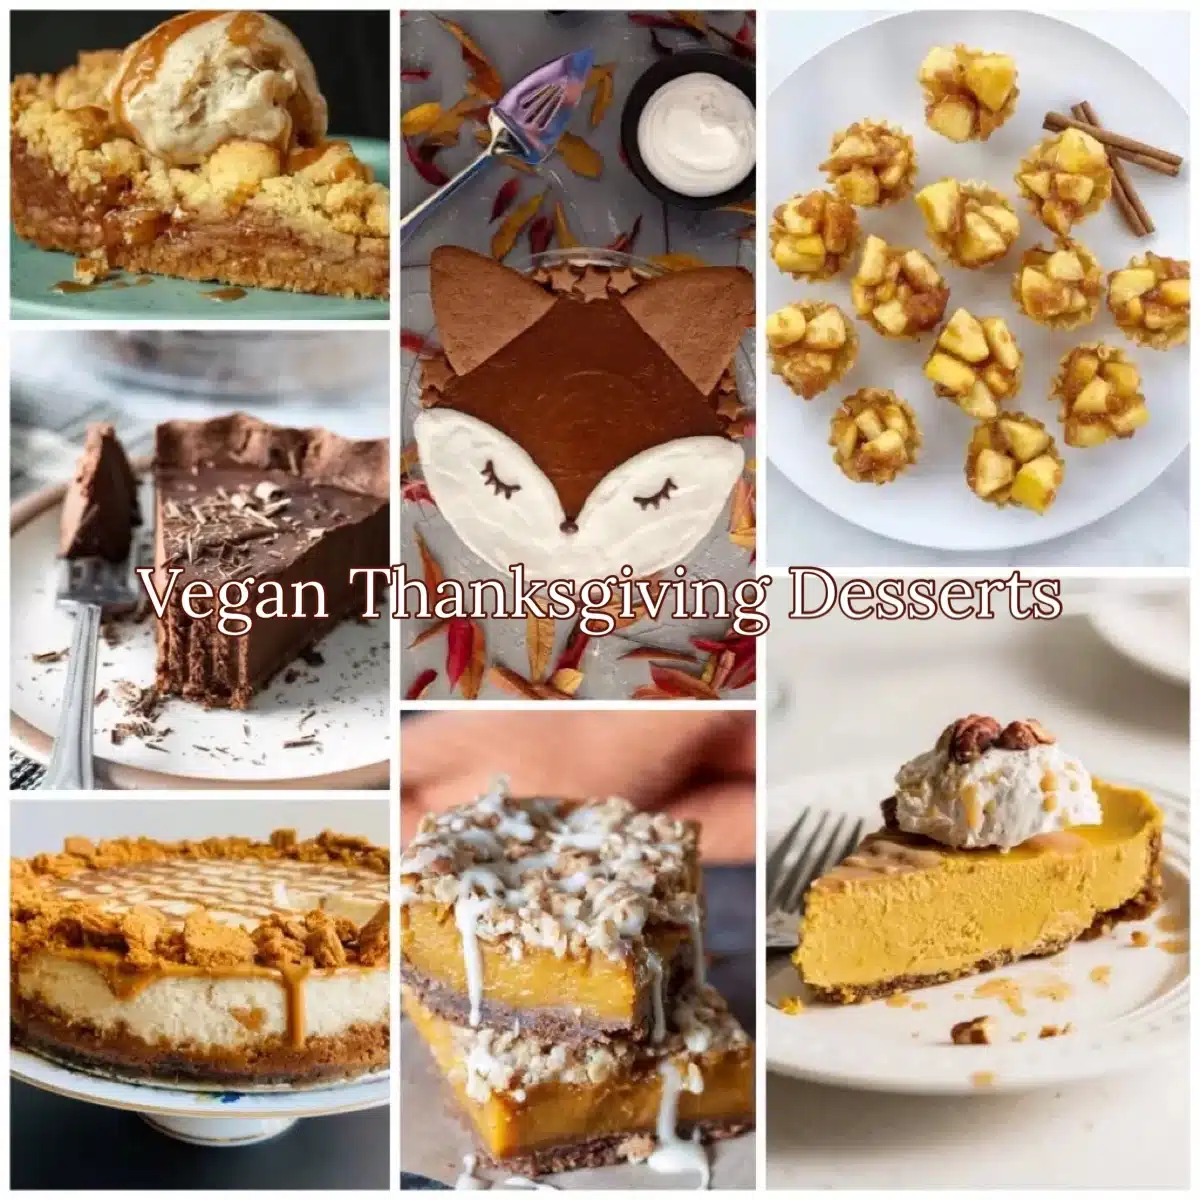 Vegan Thanksgiving Desserts Recipes